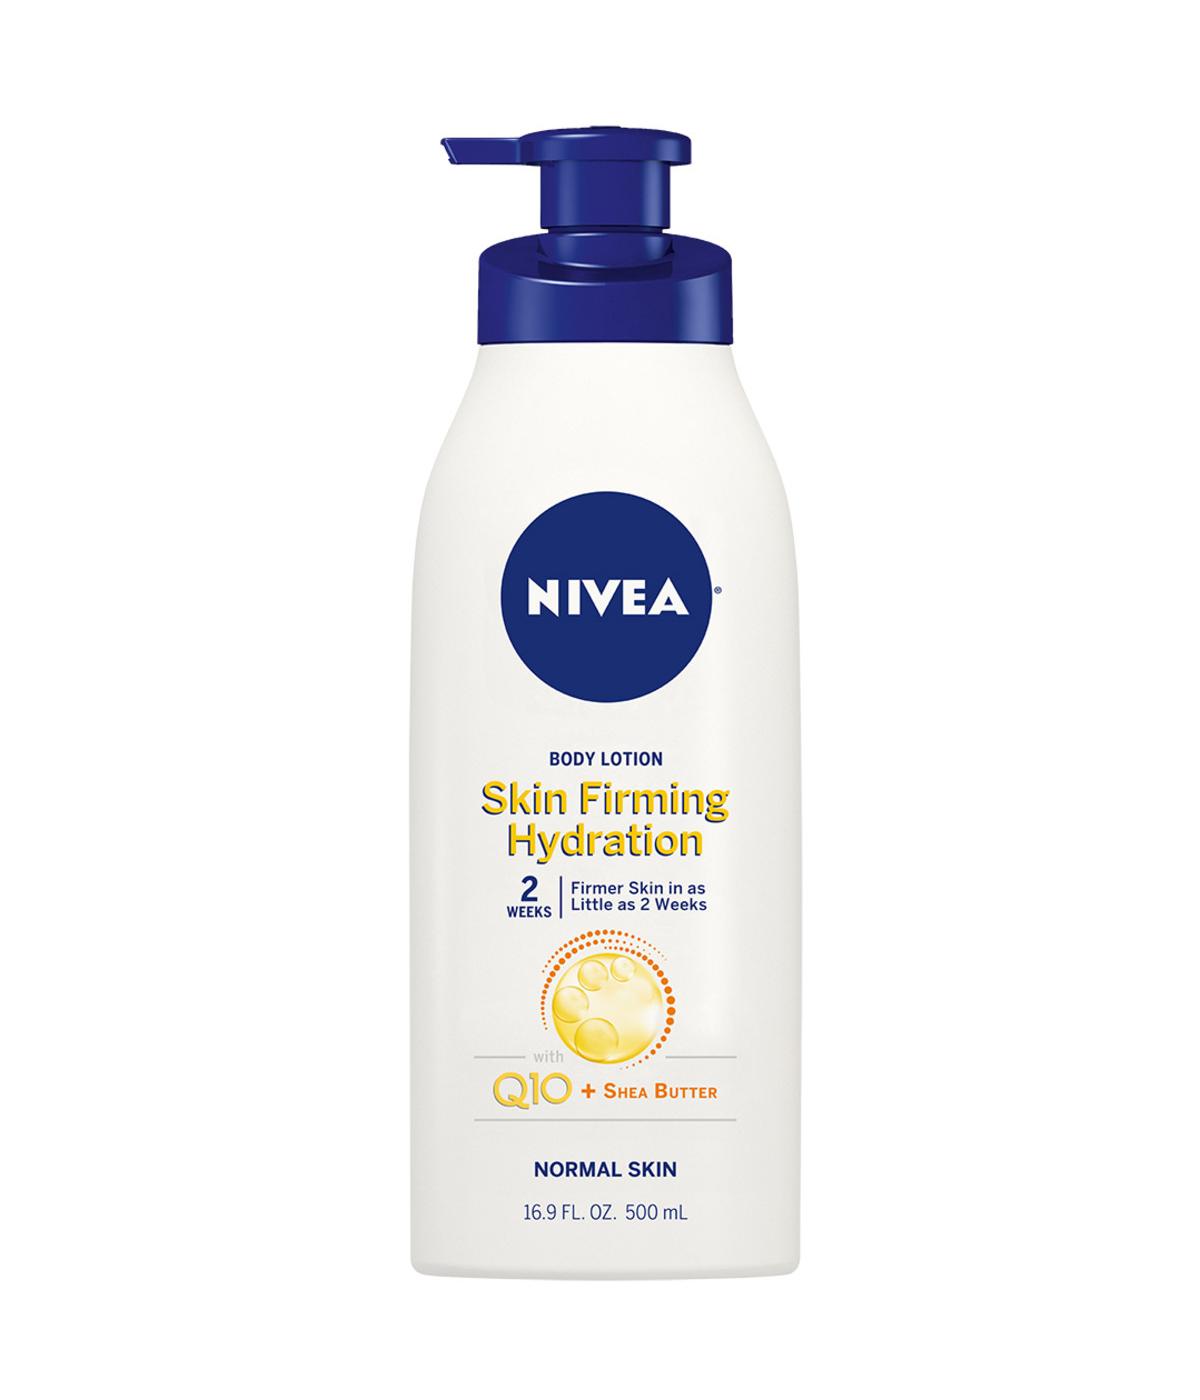 NIVEA Skin Firming Hydration Body Lotion